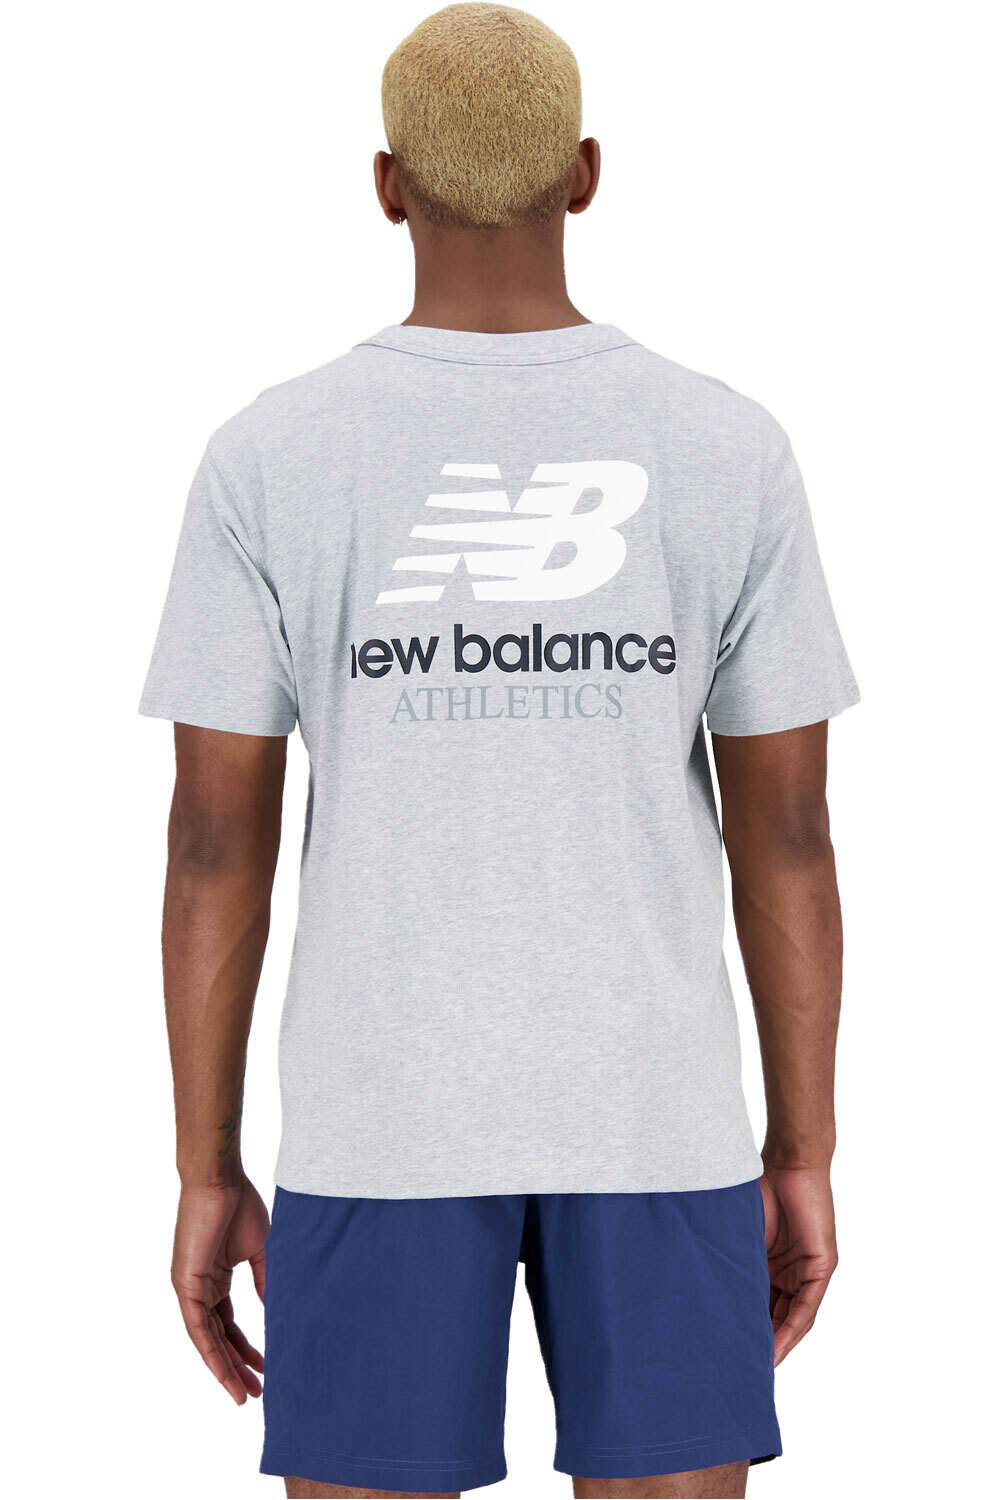 New Balance camiseta manga corta hombre Athletics Remastered Graphic vista trasera